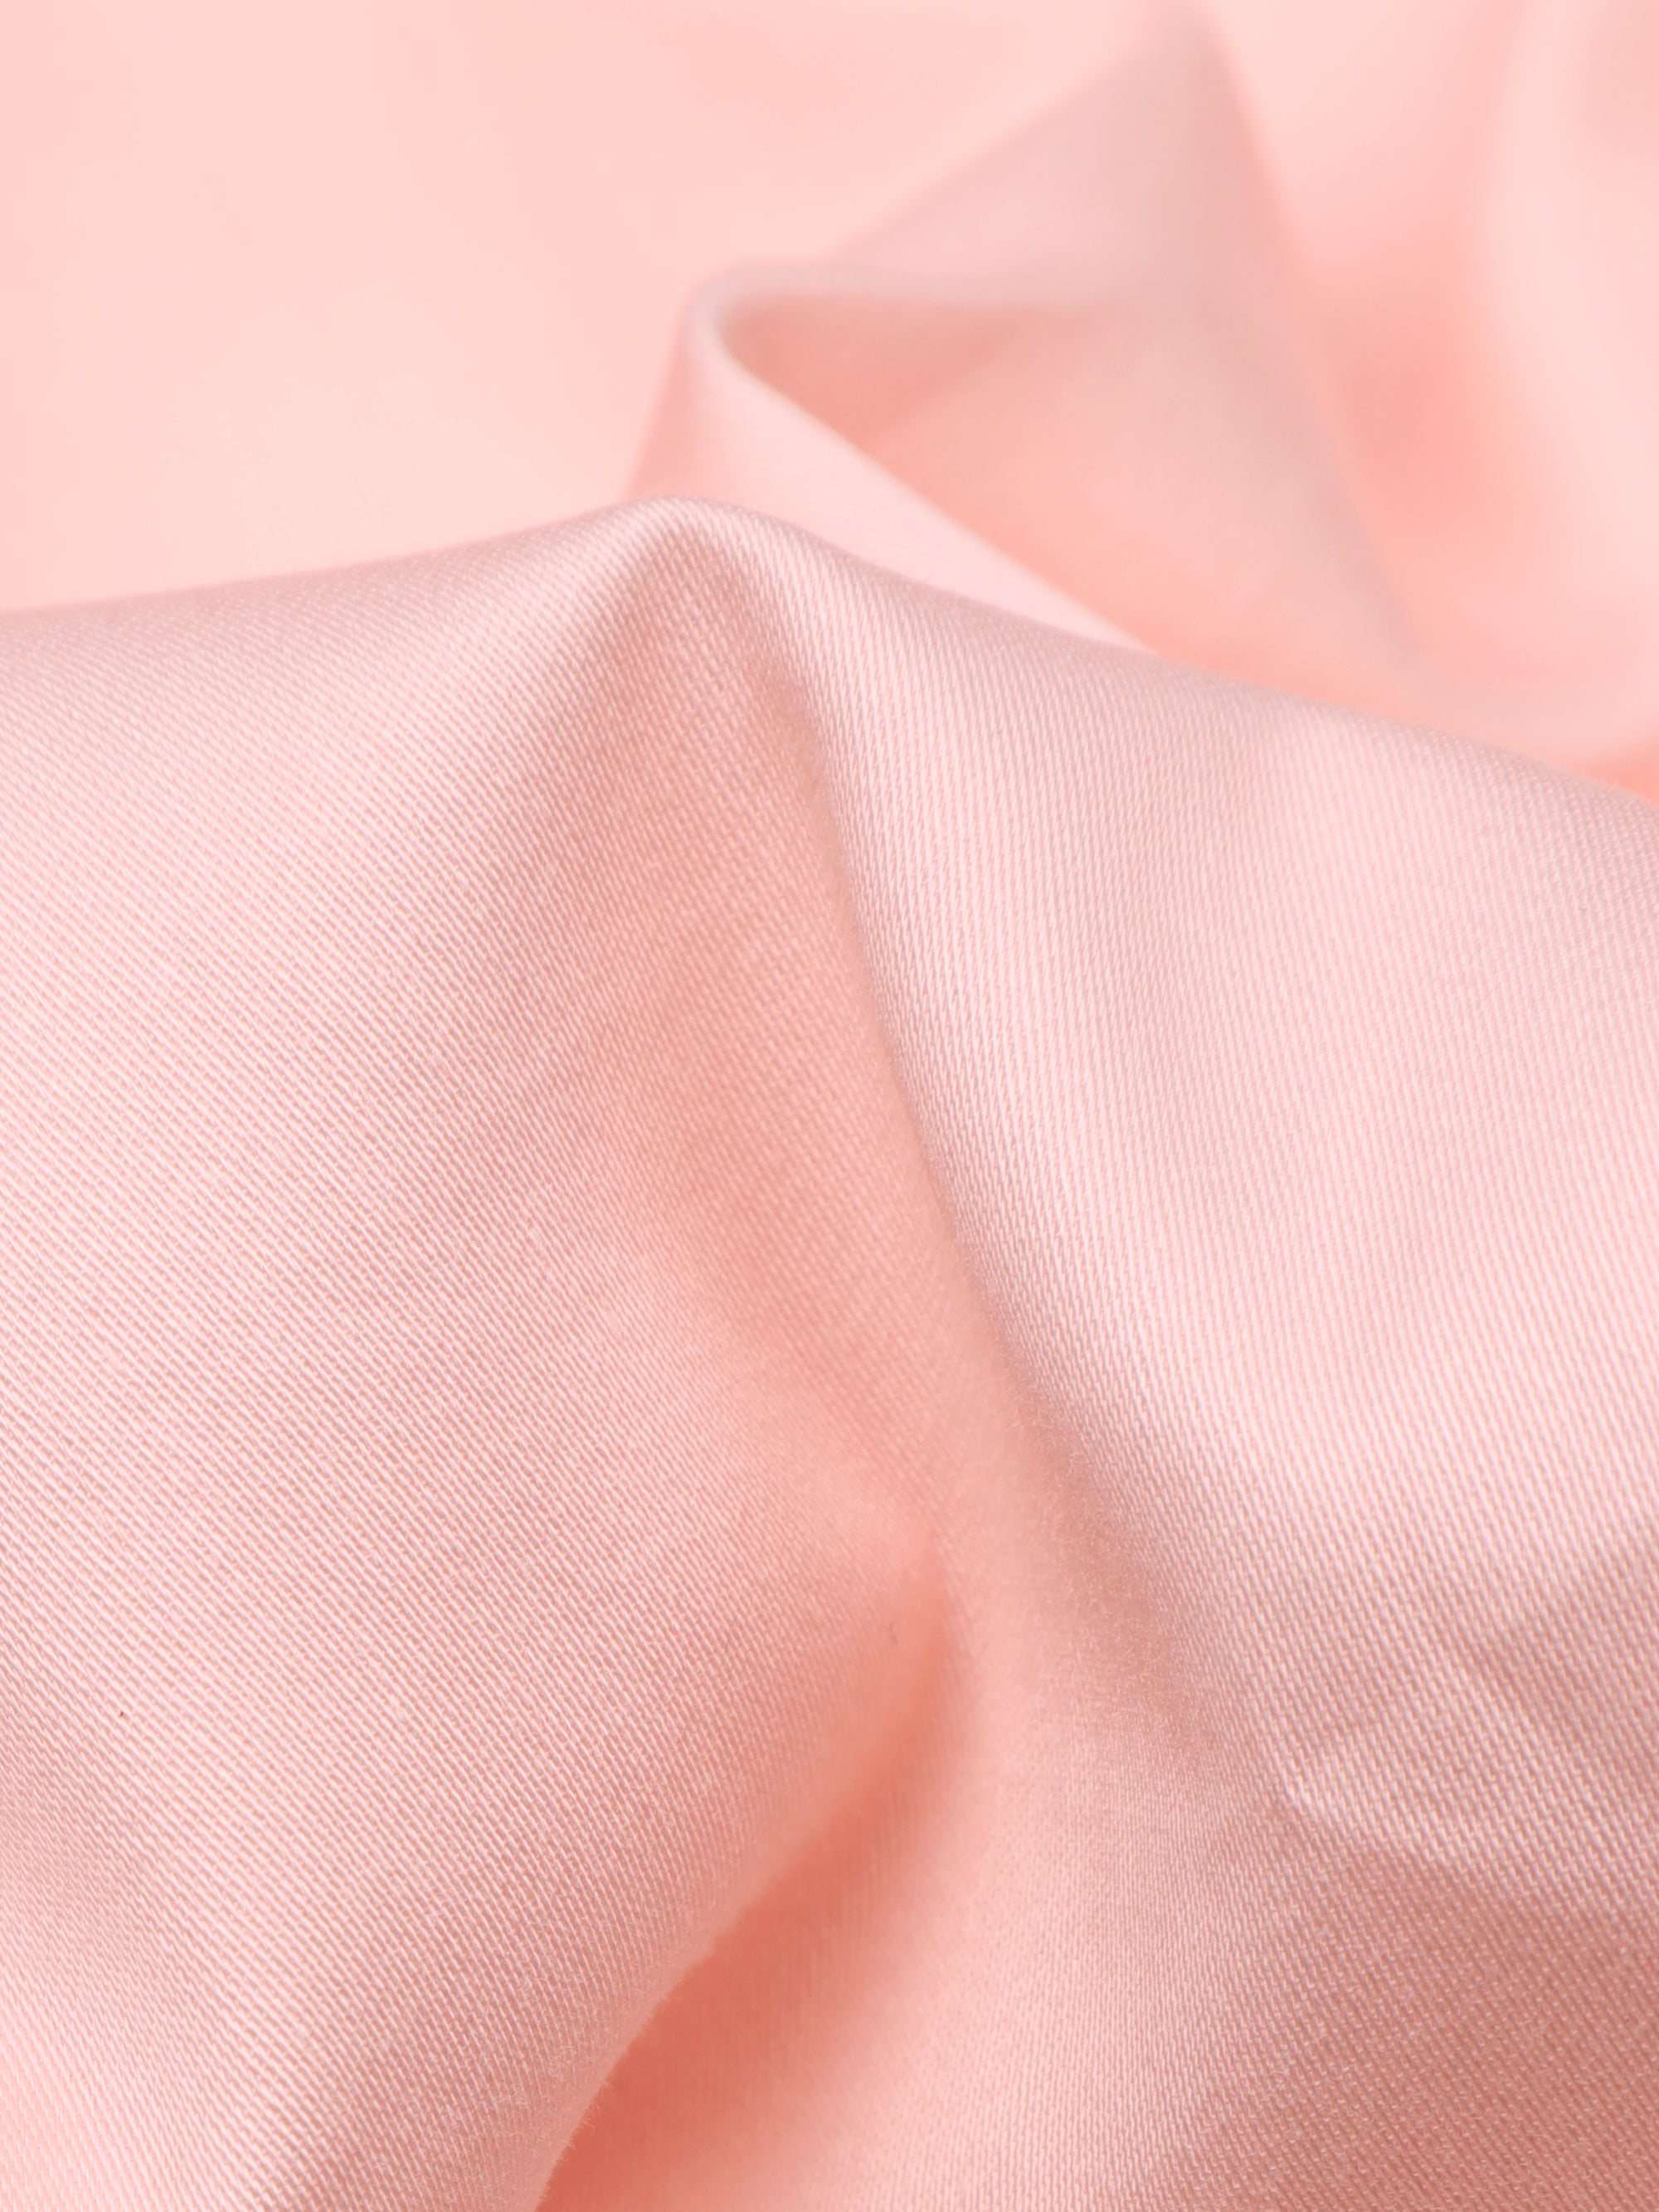 Light Soft Pink Subtle Sheen Super Premium Cotton Shirt